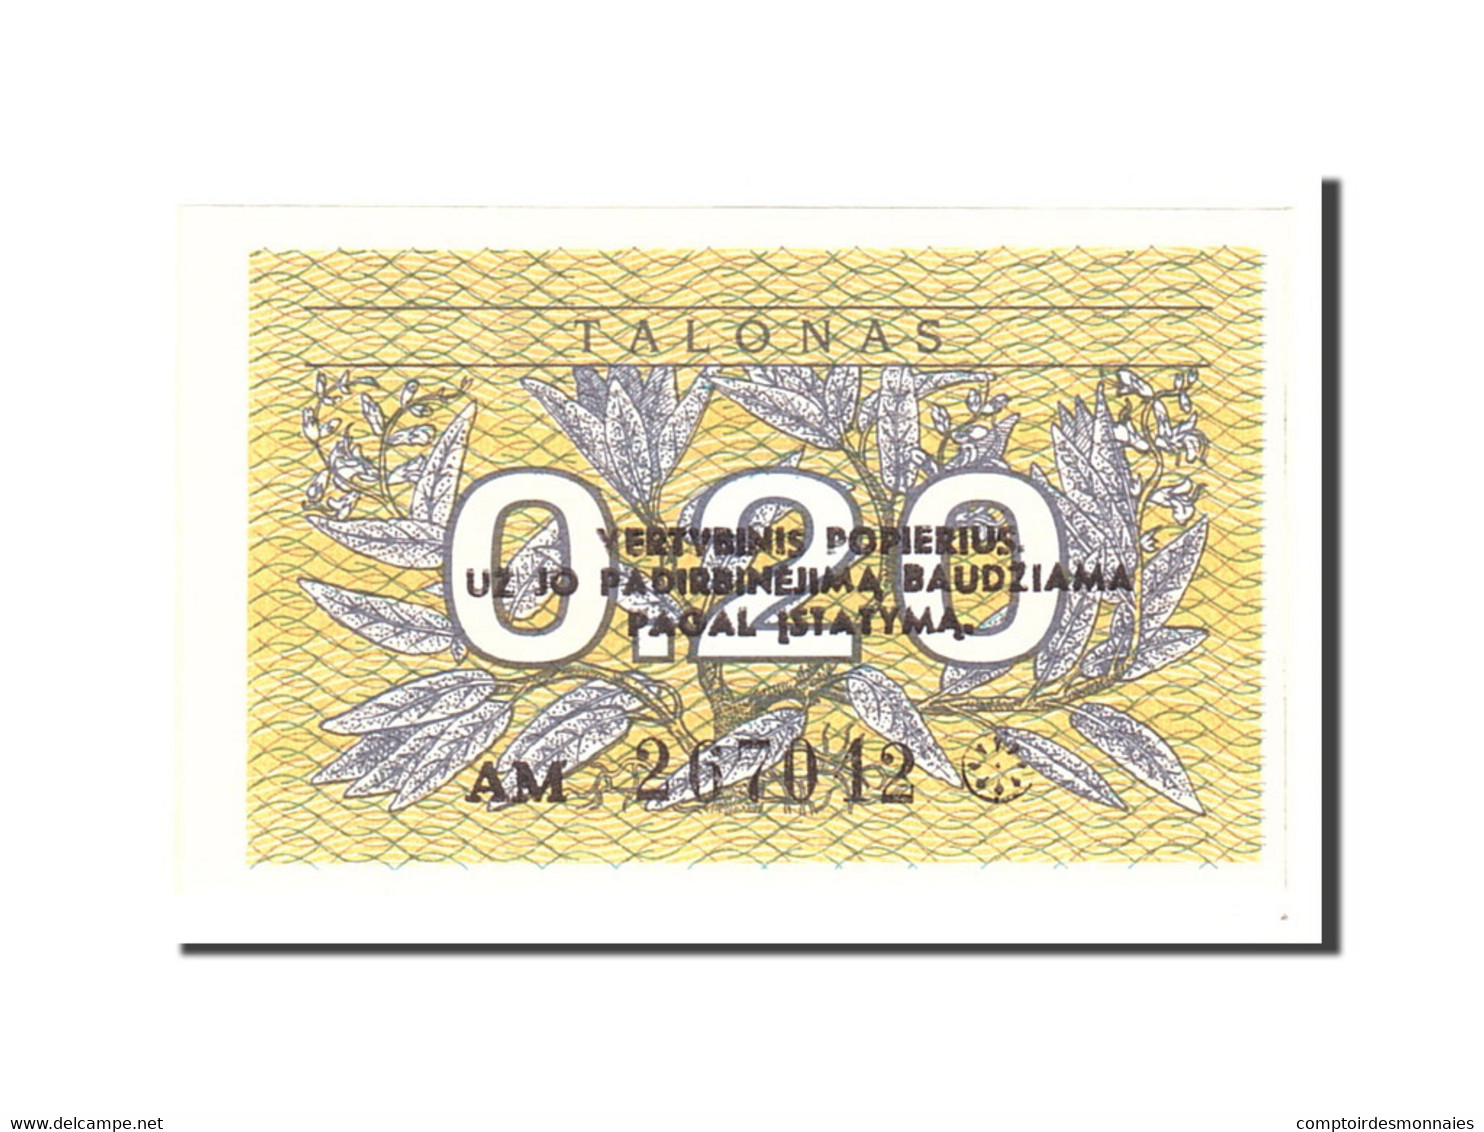 Billet, Lithuania, 0.20 Talonas, 1991, Undated, KM:30, NEUF - Lithuania